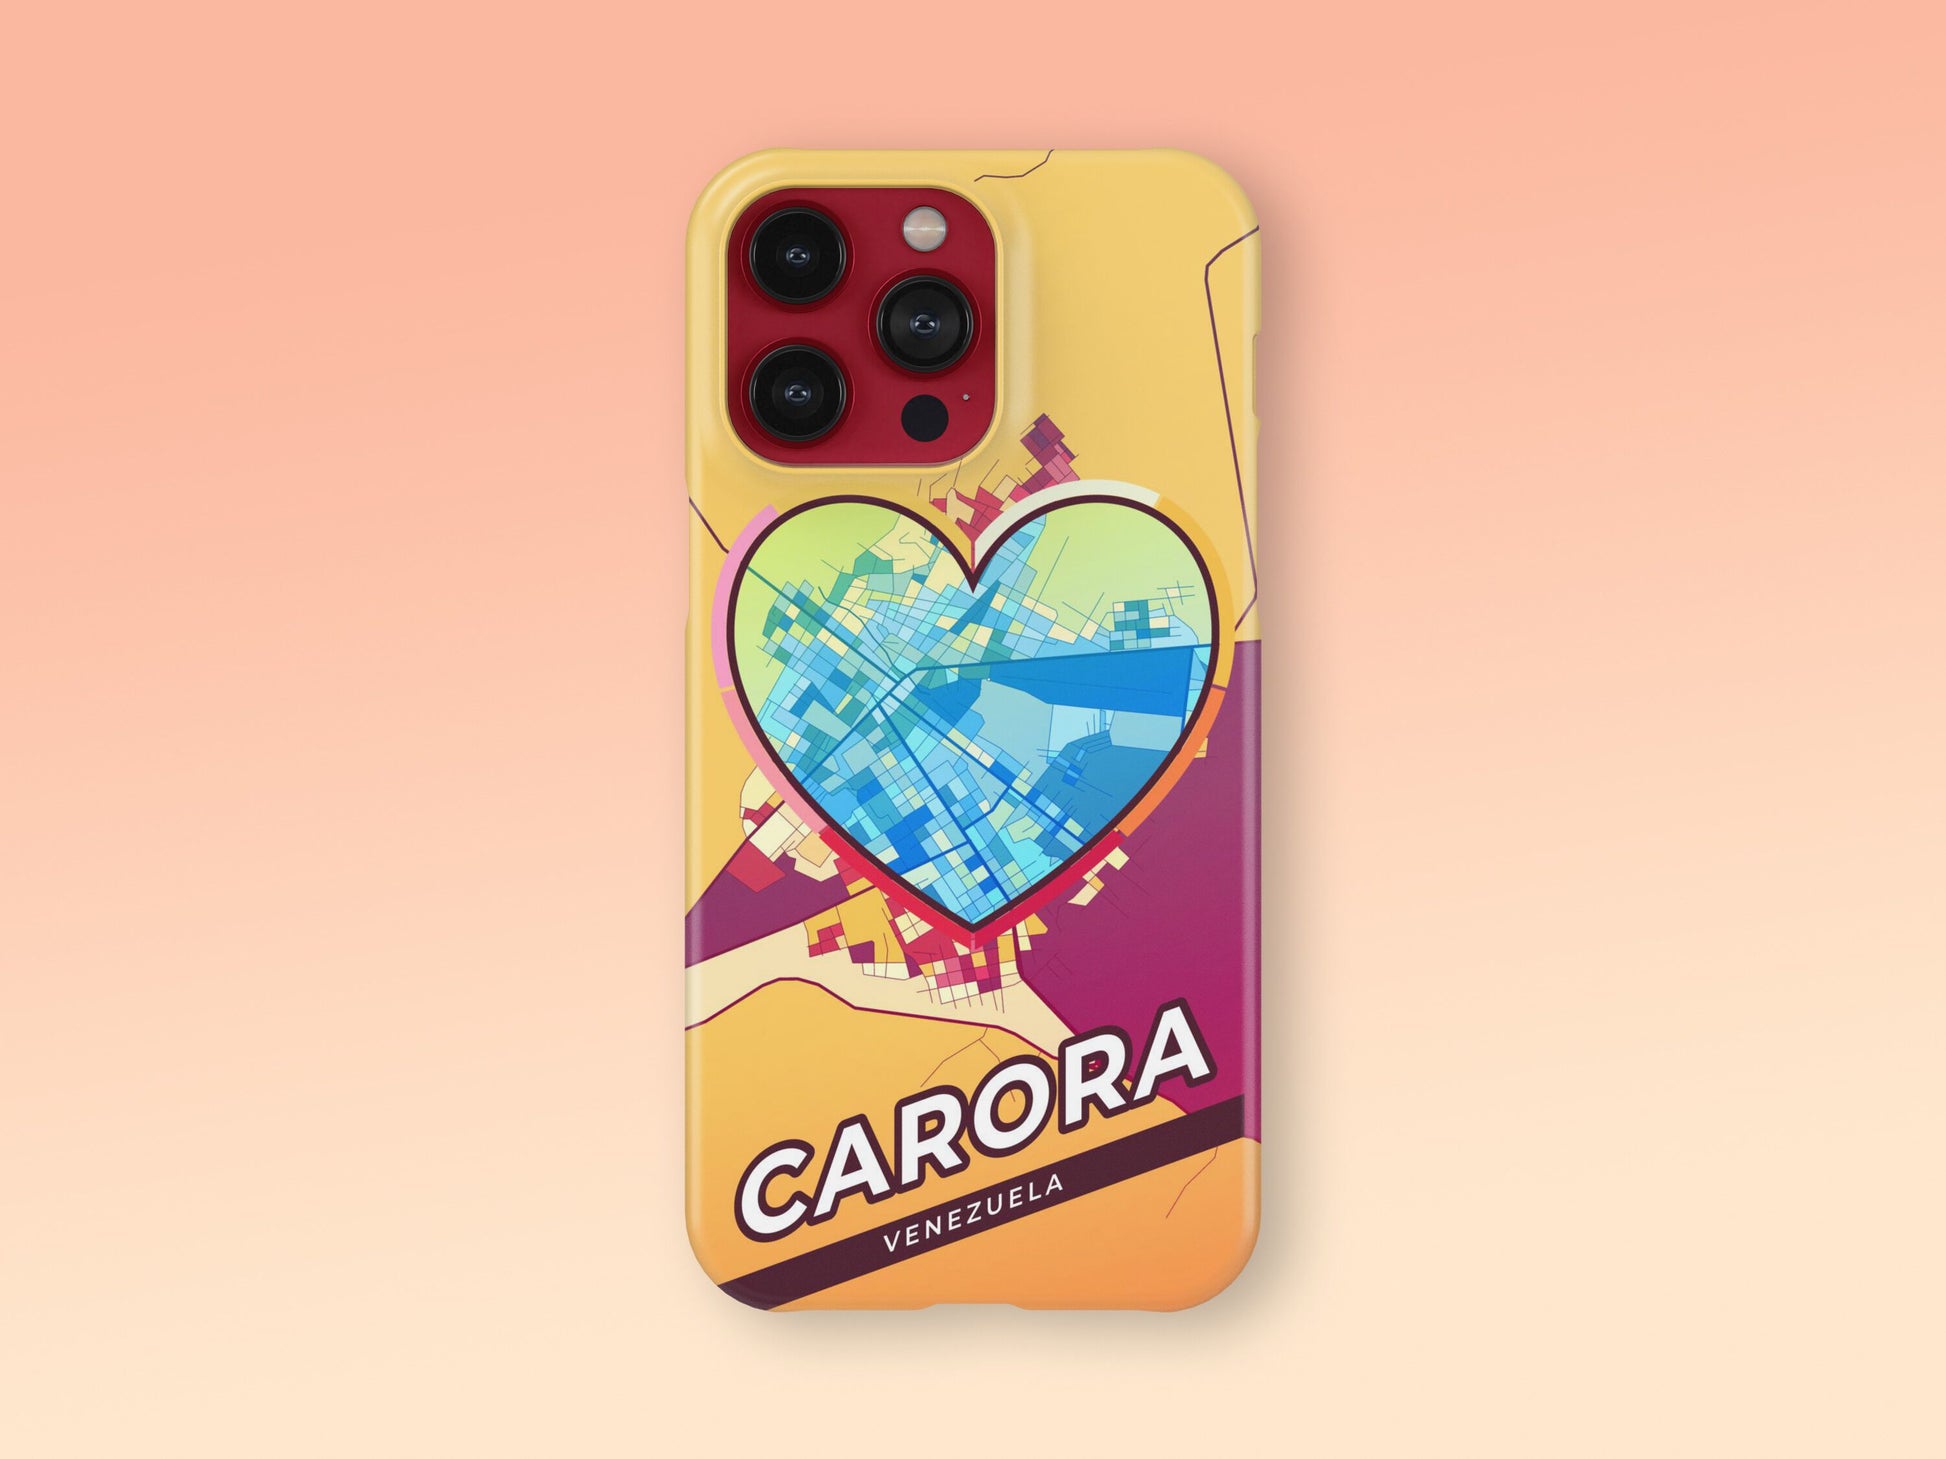 Carora Venezuela slim phone case with colorful icon. Birthday, wedding or housewarming gift. Couple match cases. 2